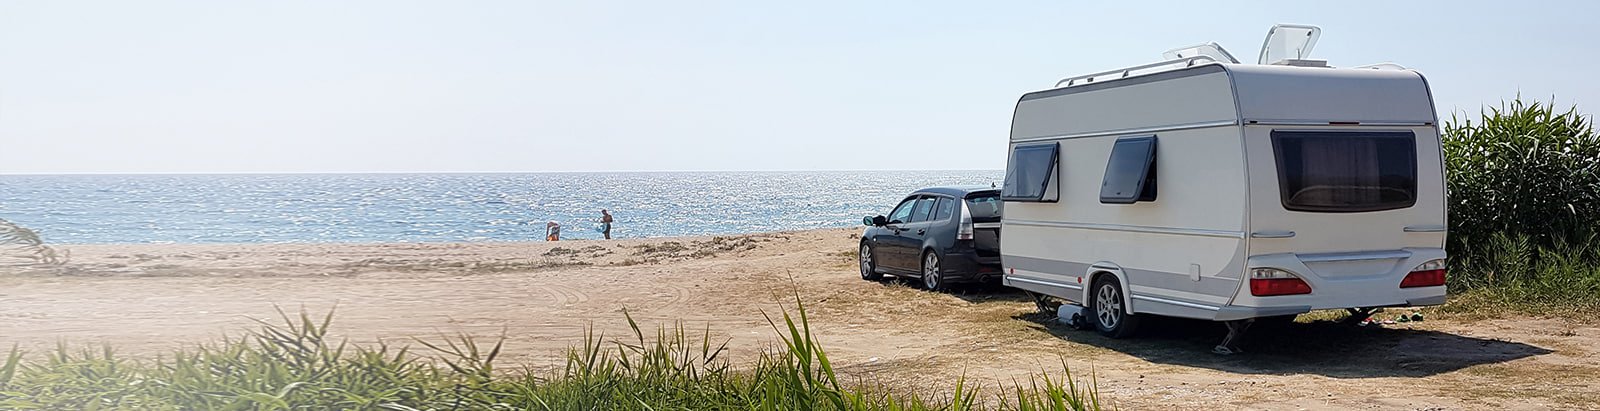 Caravan parked on a sunny quiet beach